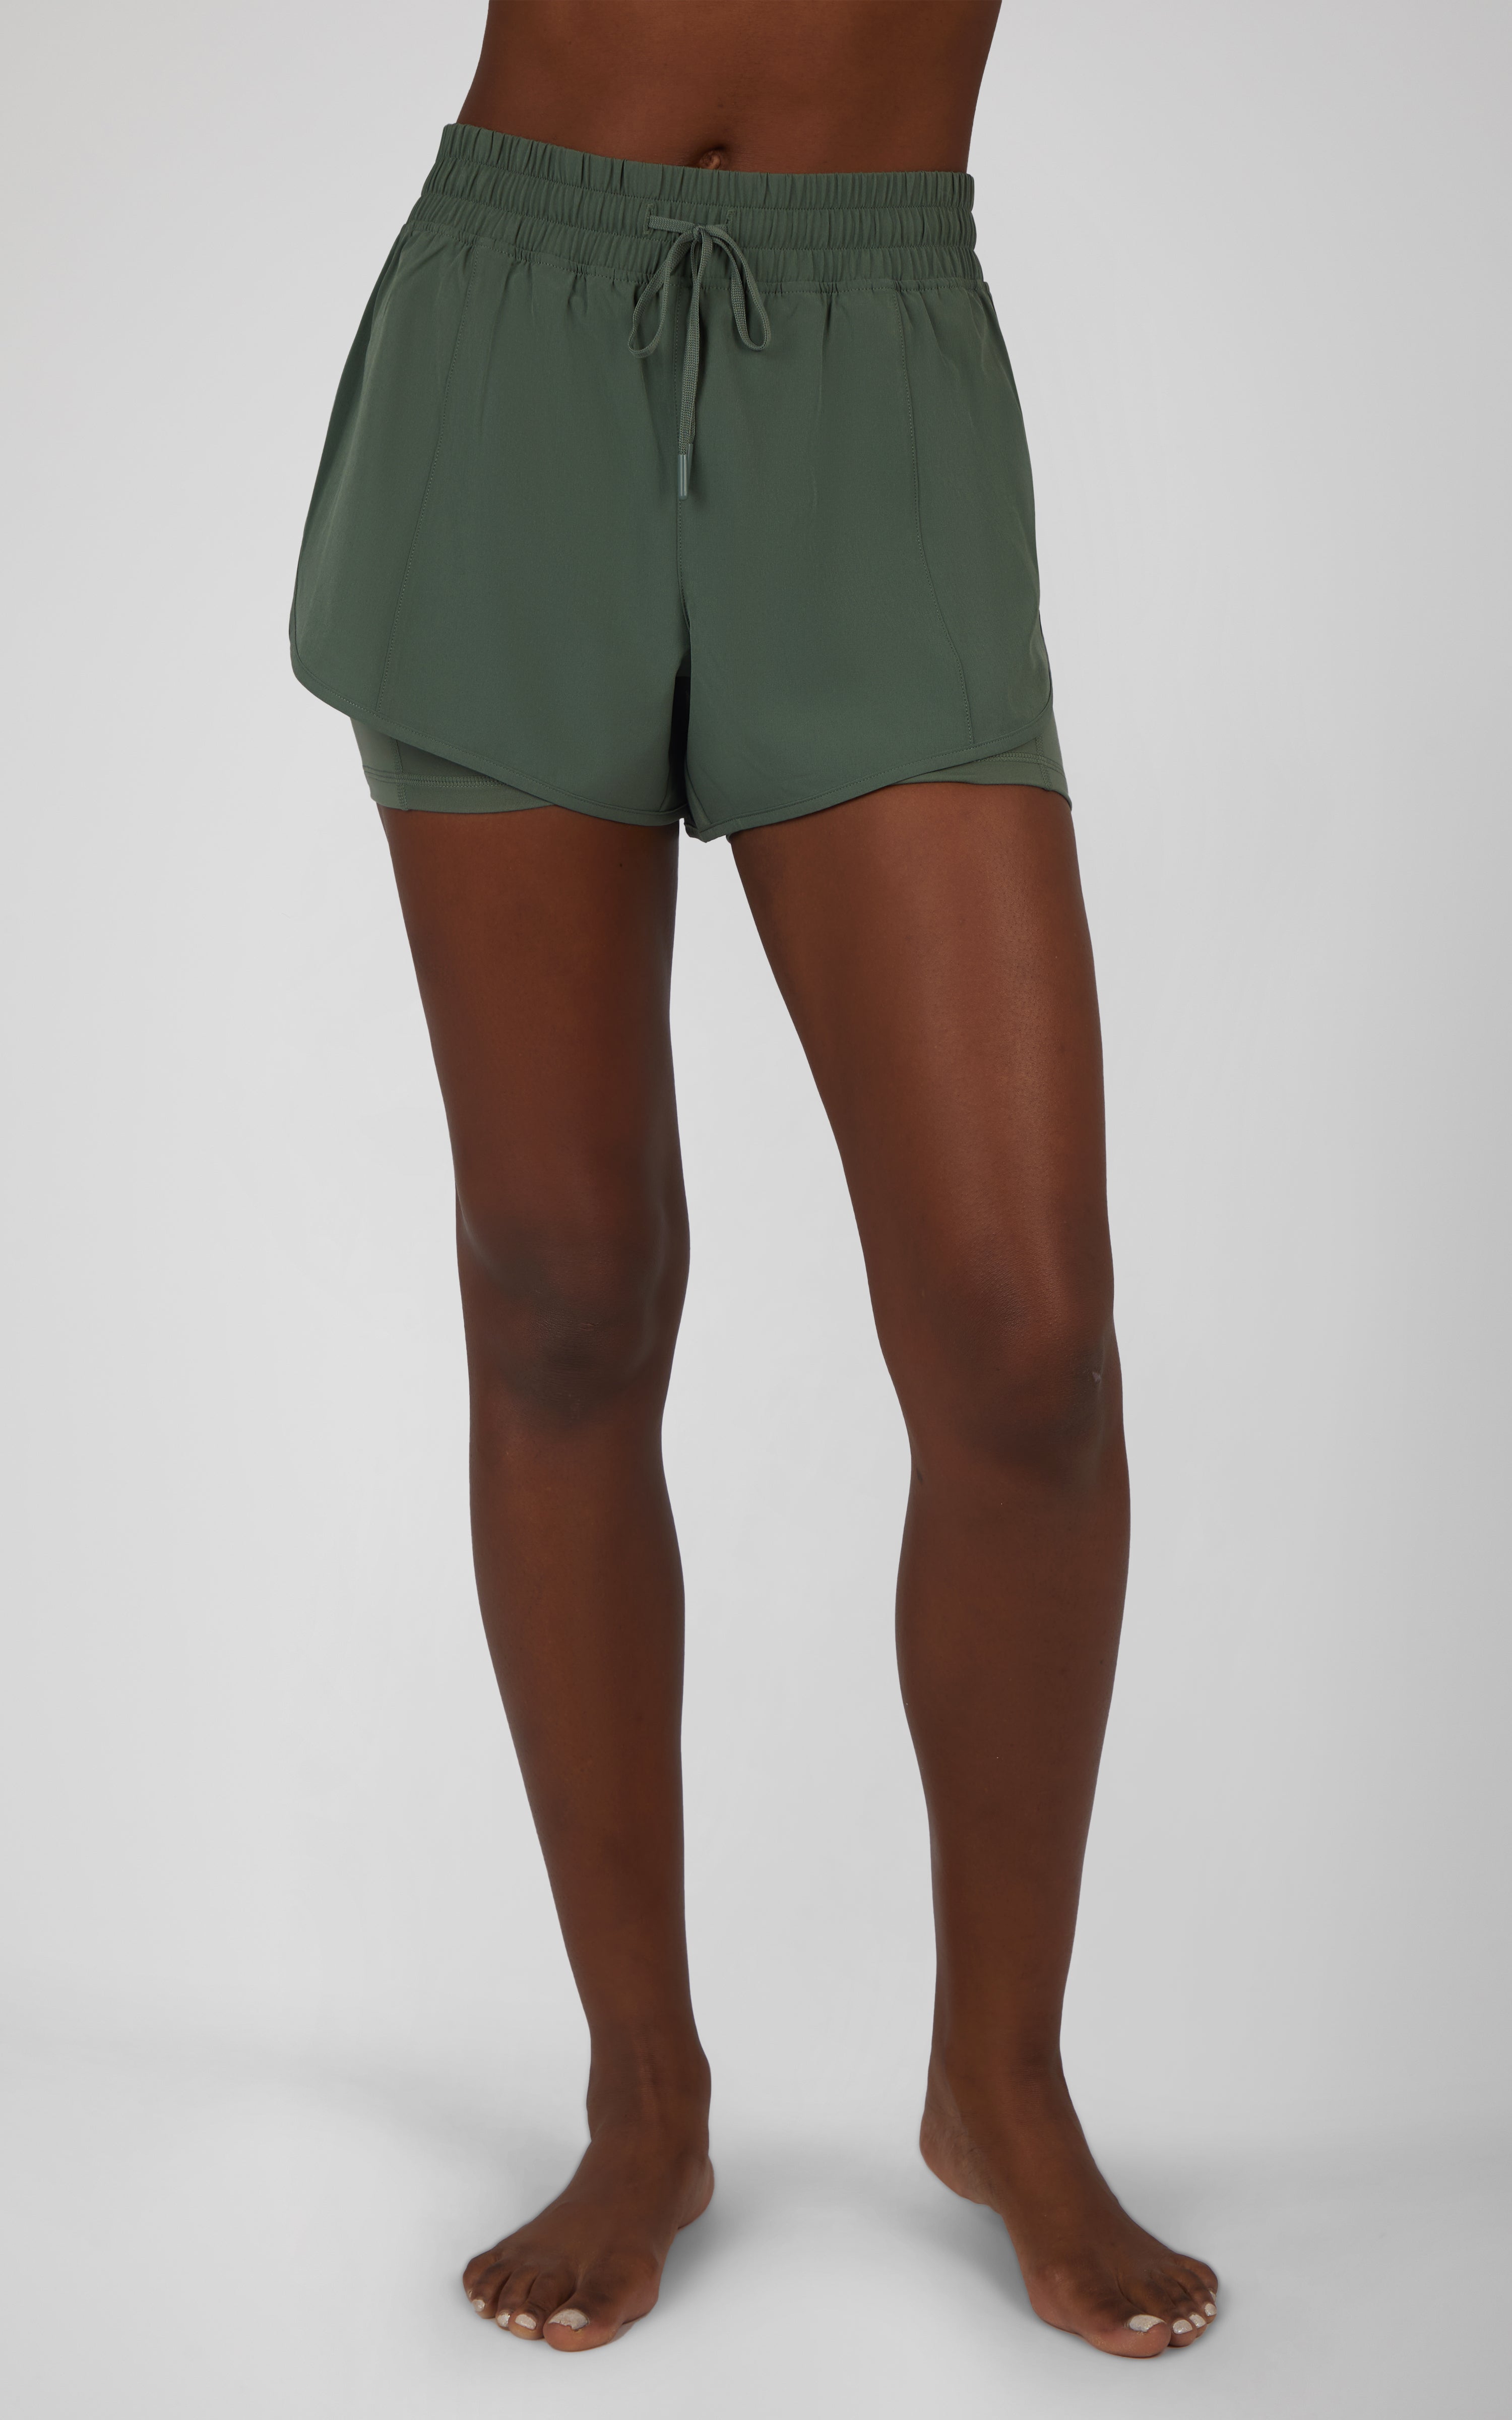 WINNYC Lux 2-in-1 Running Shorts with Drawstring